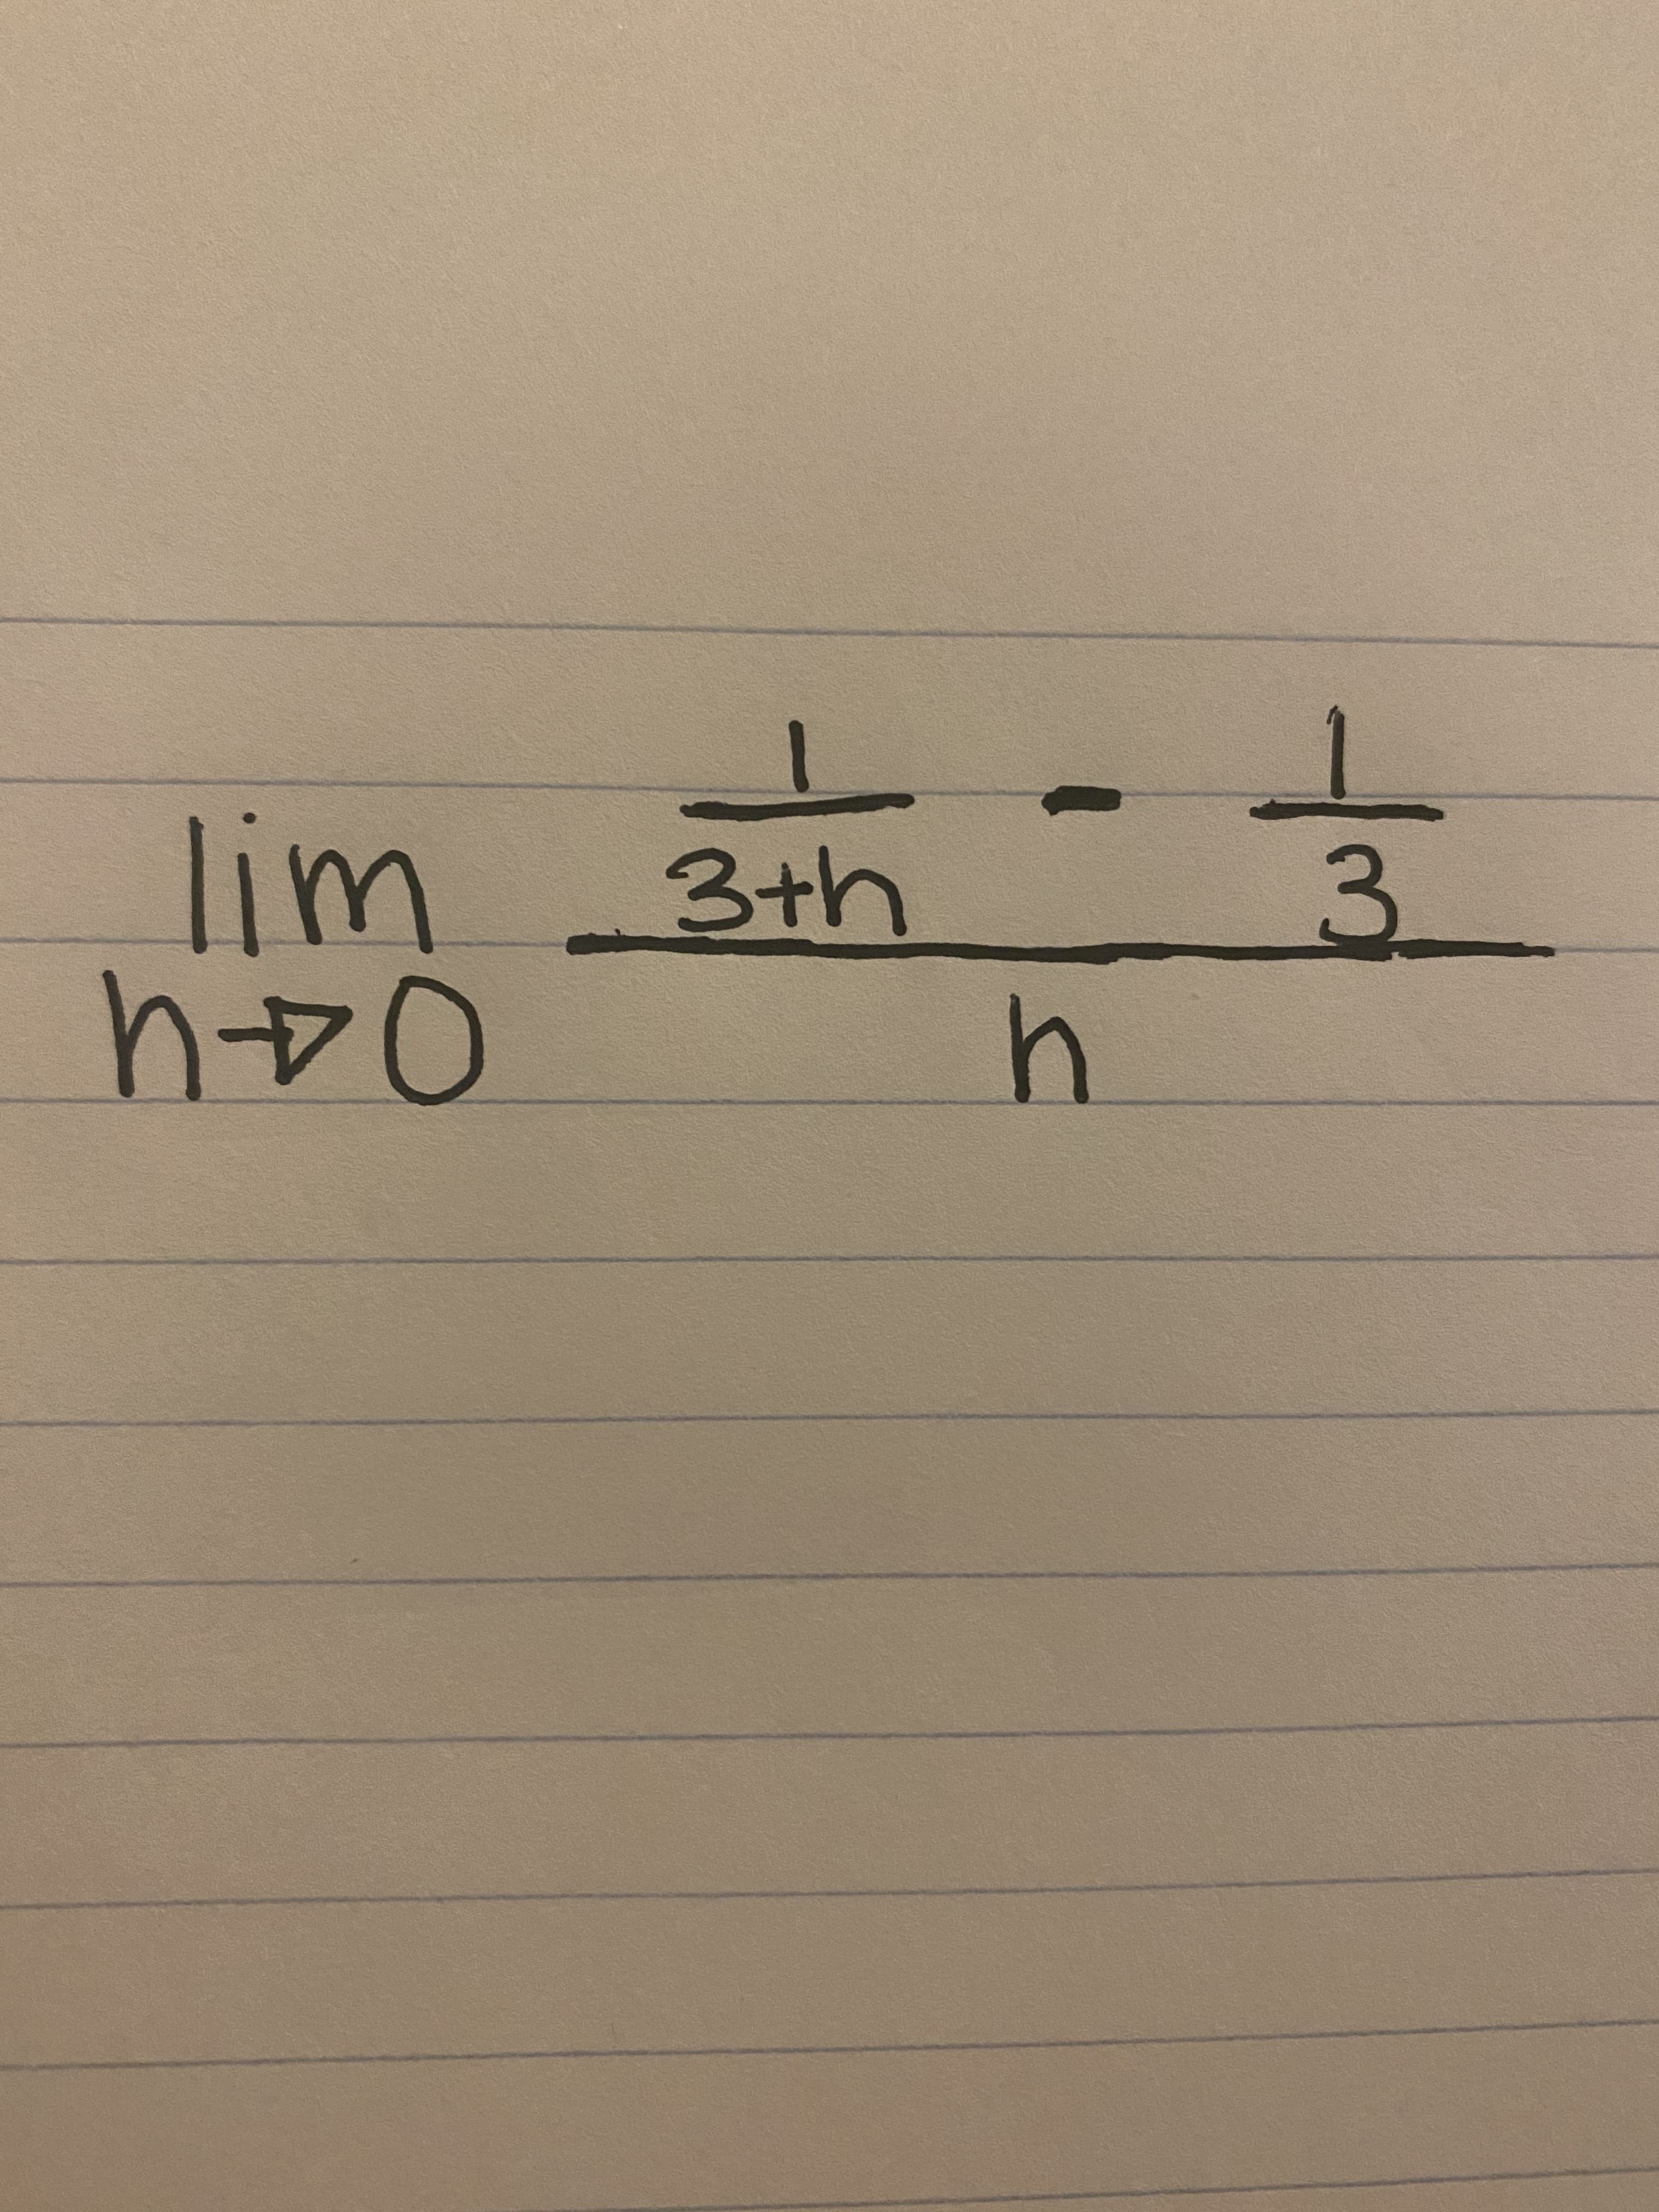 lim
3.
+th
3+h
